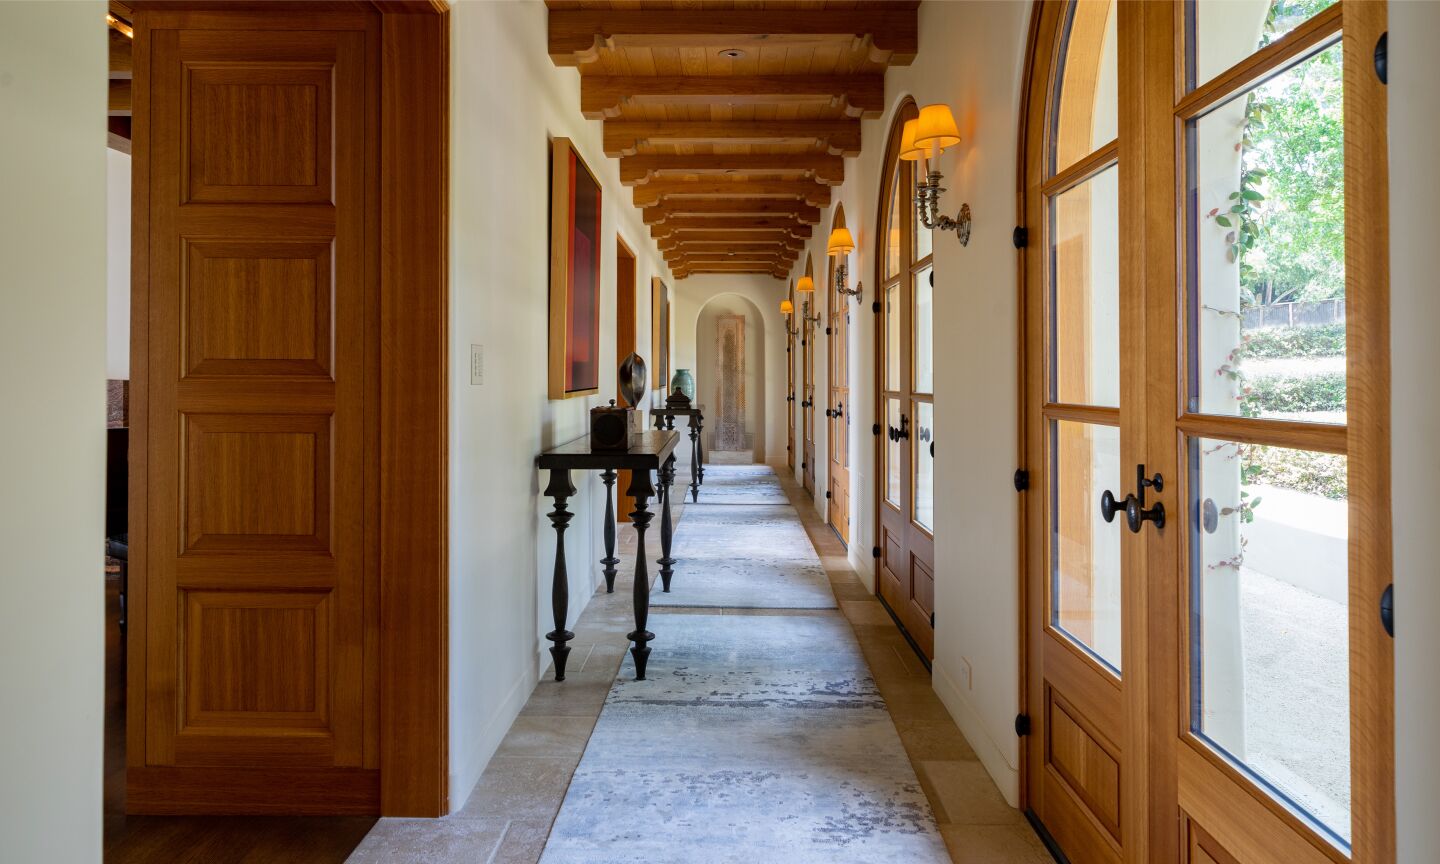 The hallway.